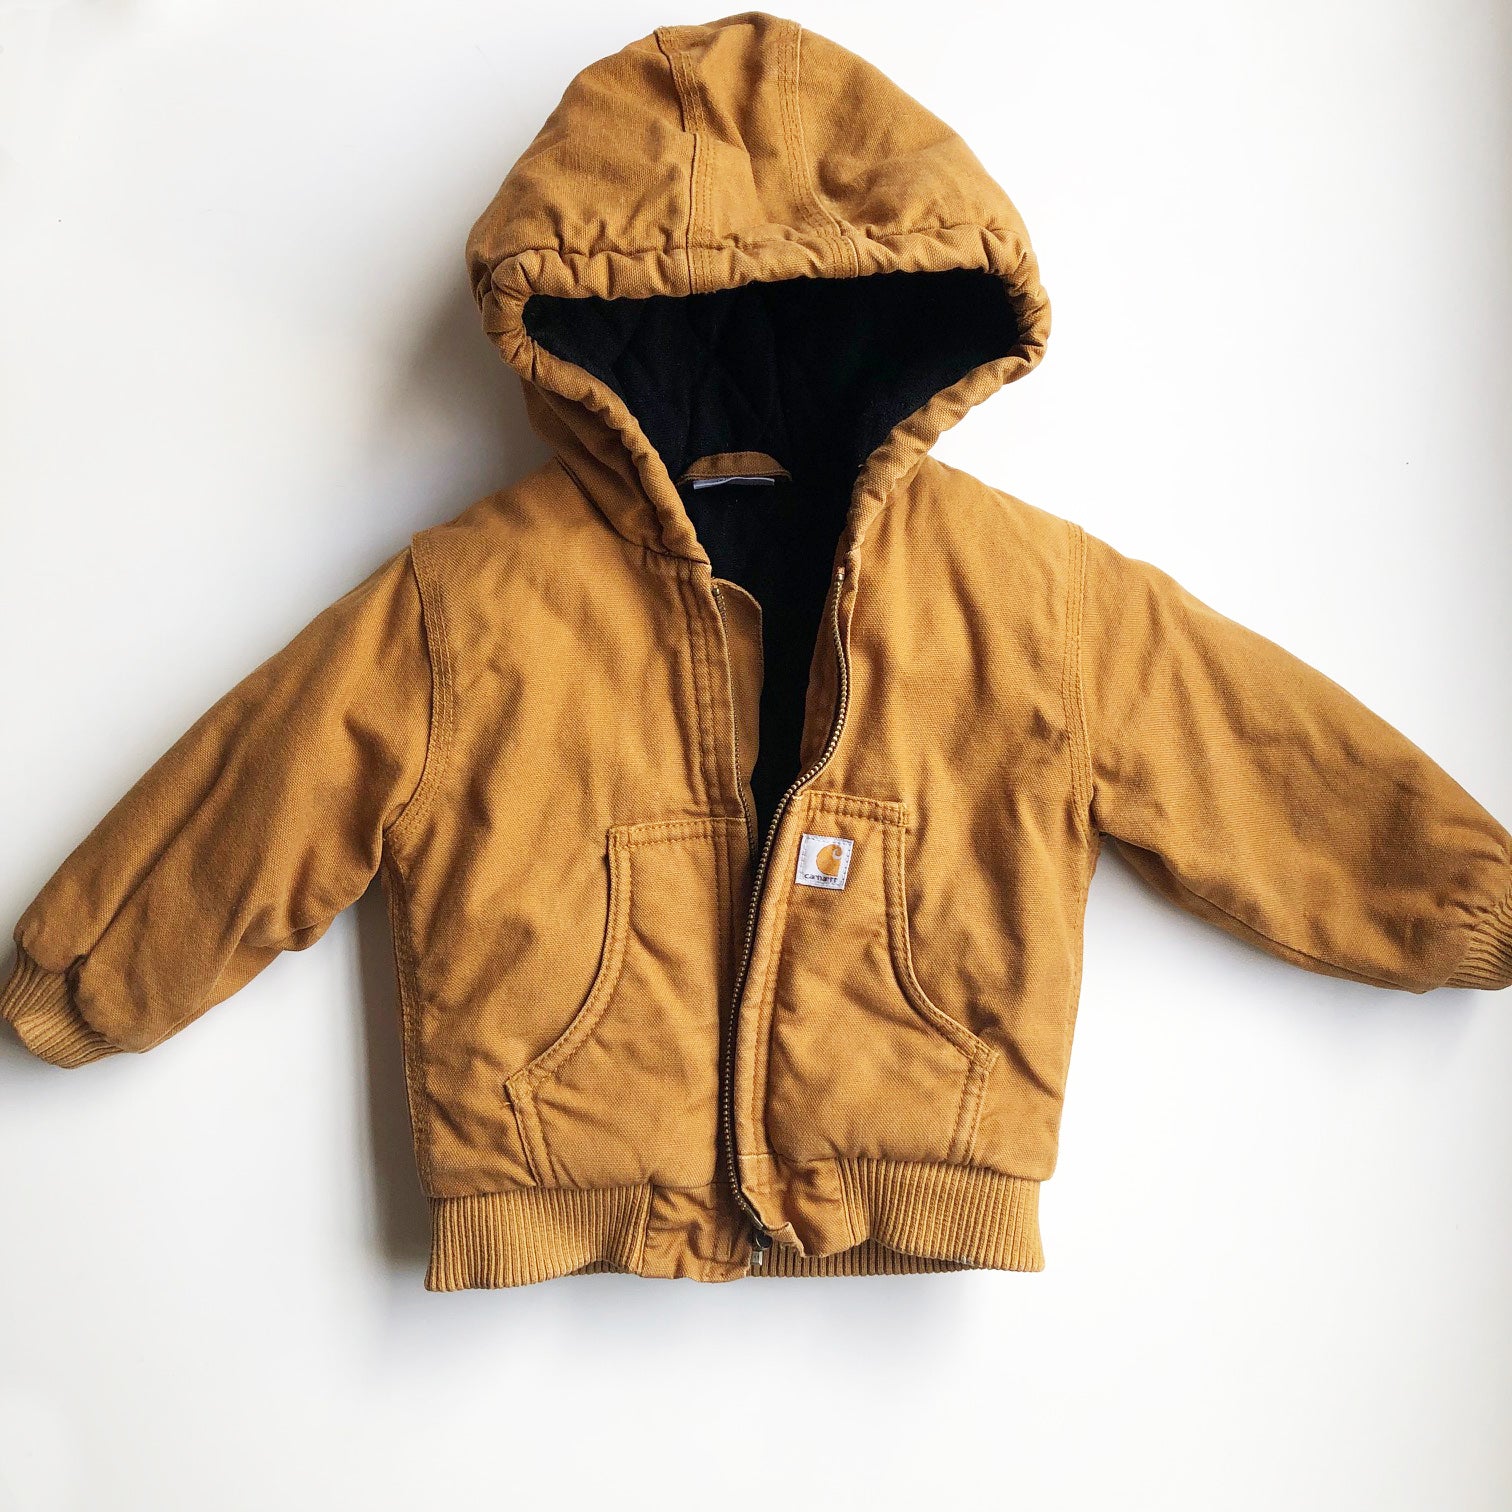 Carhartt Preloved Hooded Jacket size 12 months.